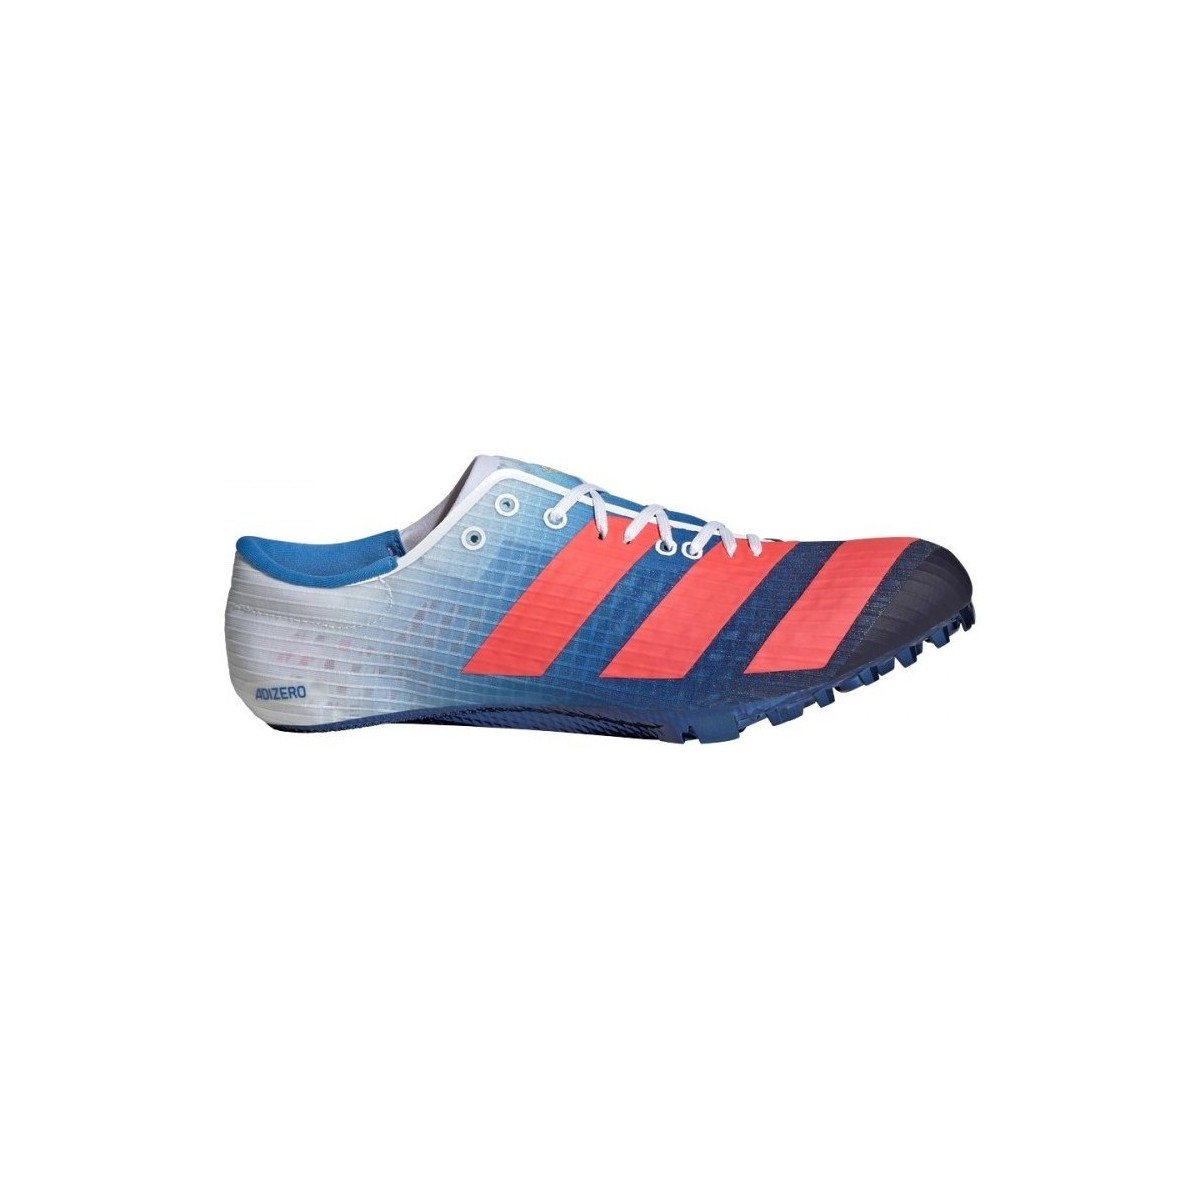 Chaussures Running / trail adidas Originals Adizero Finesse Bleu